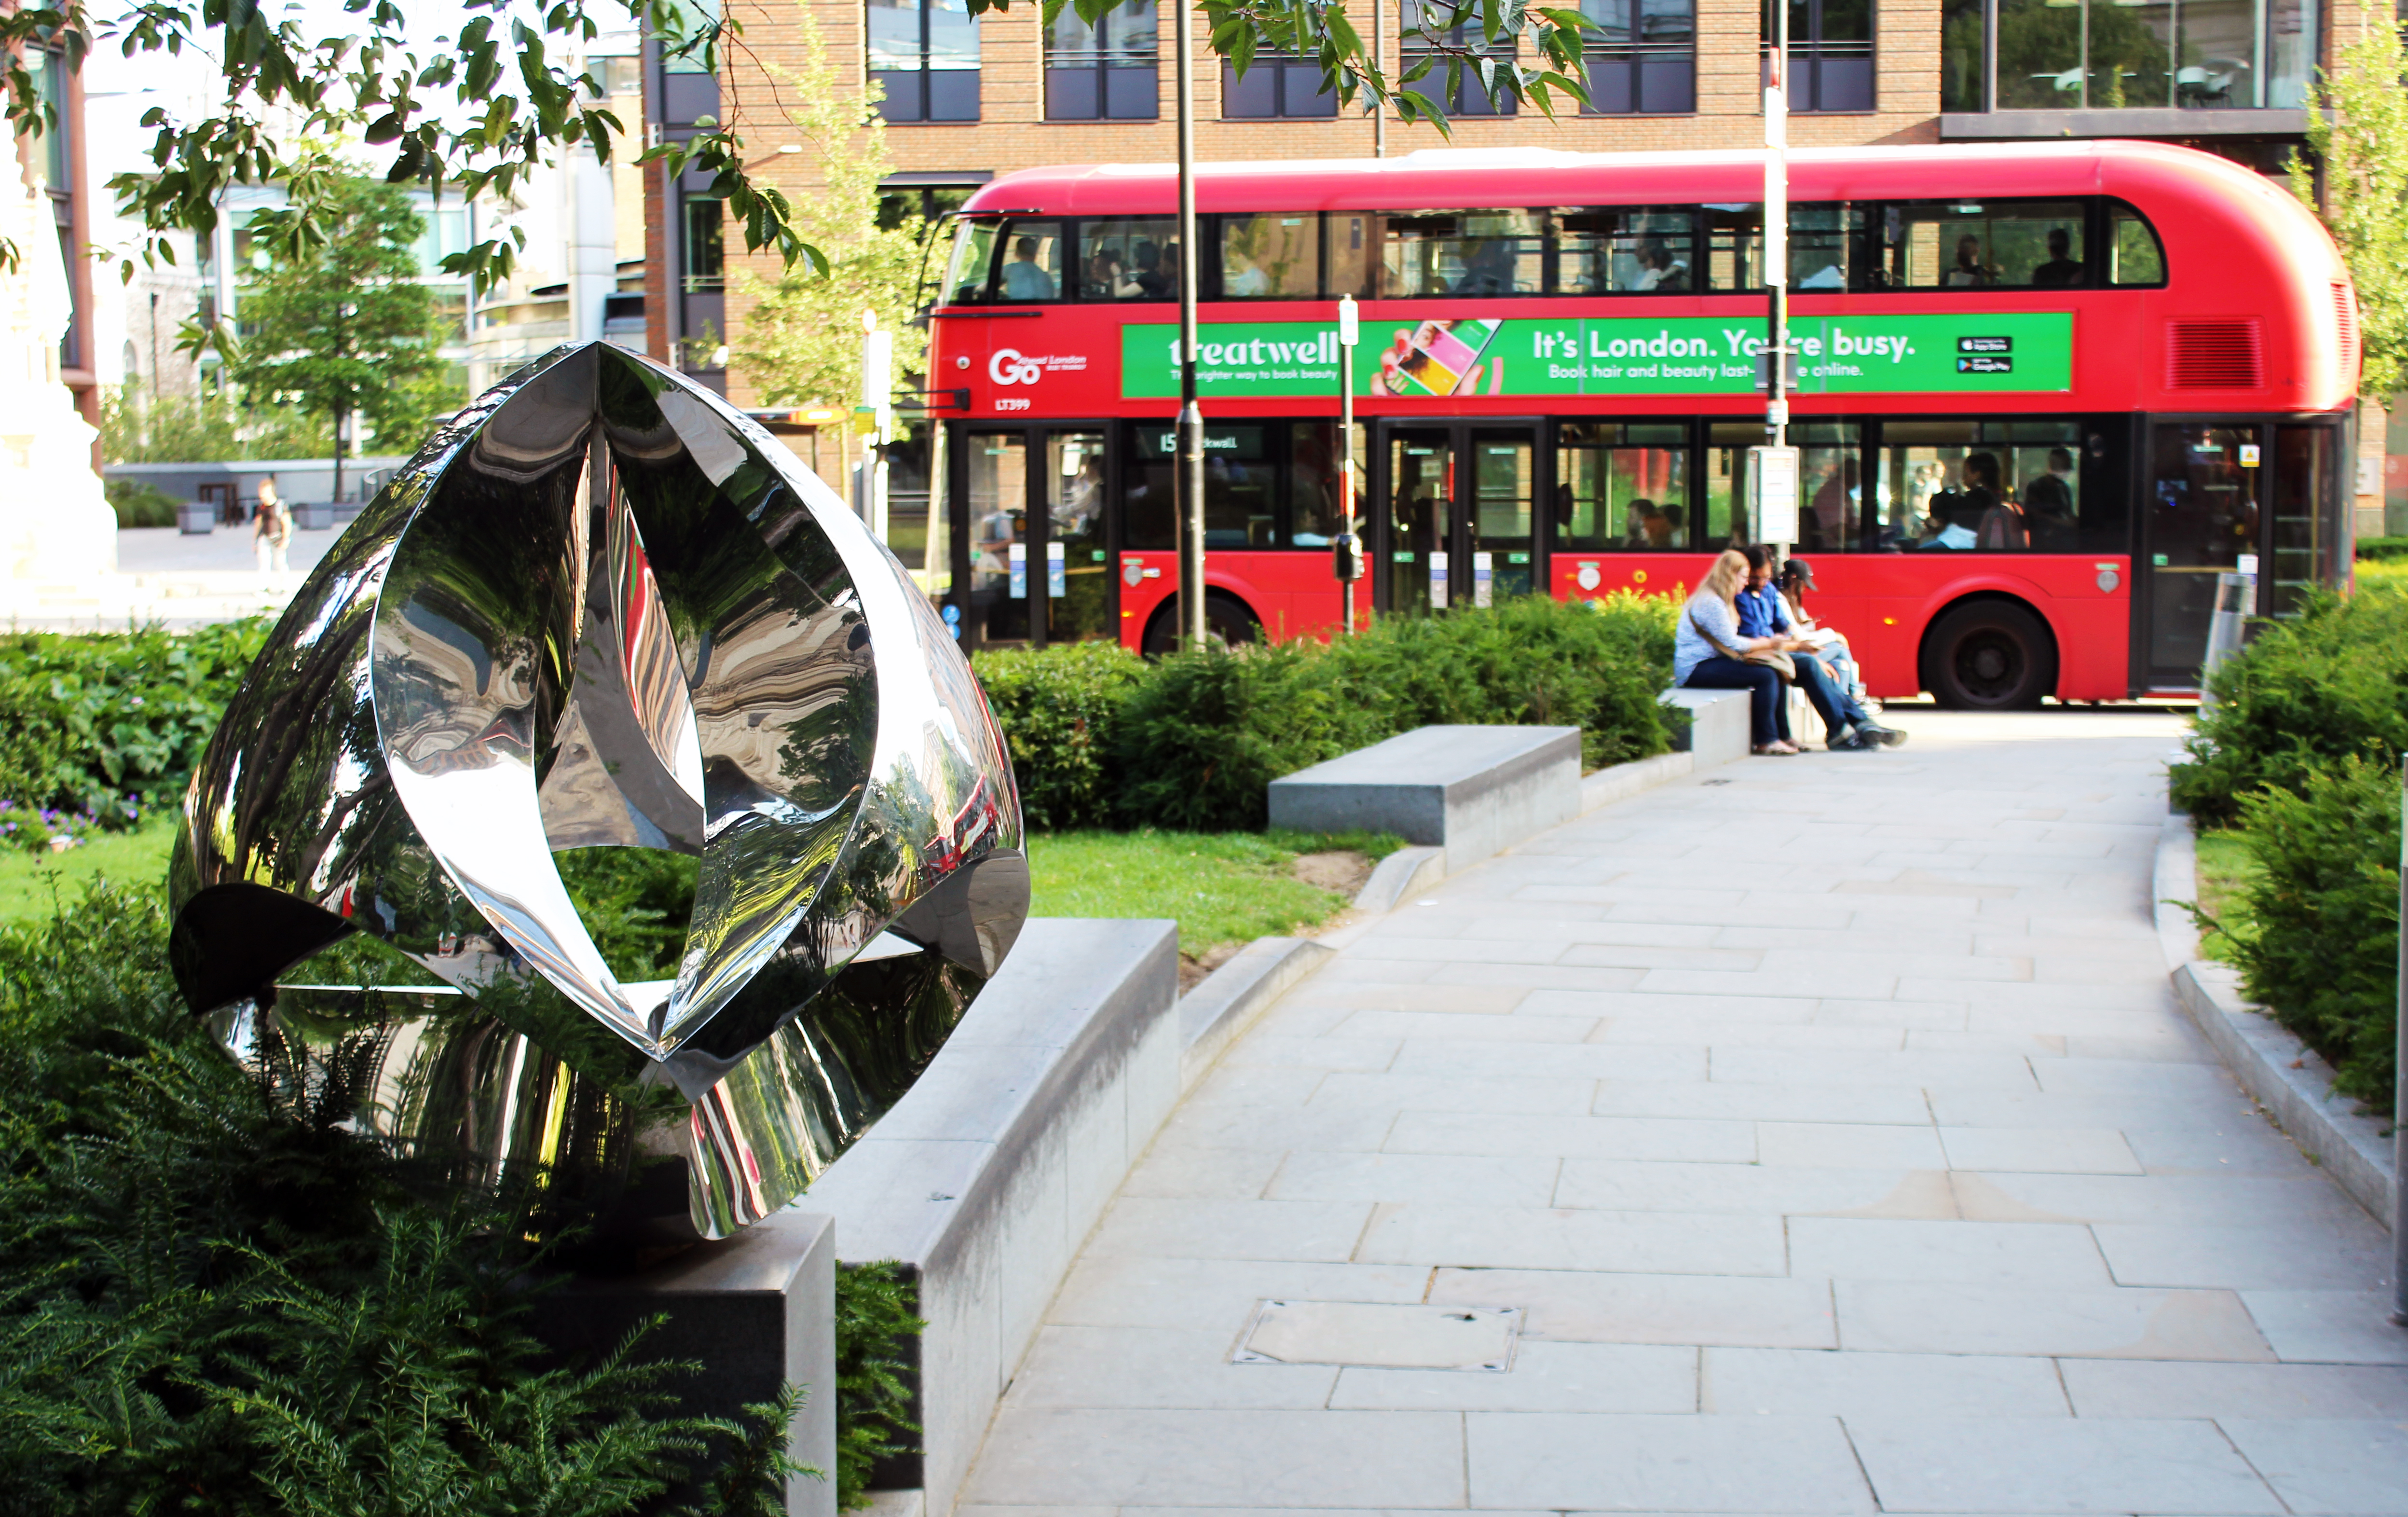 Paul Mount sculpture with London bus